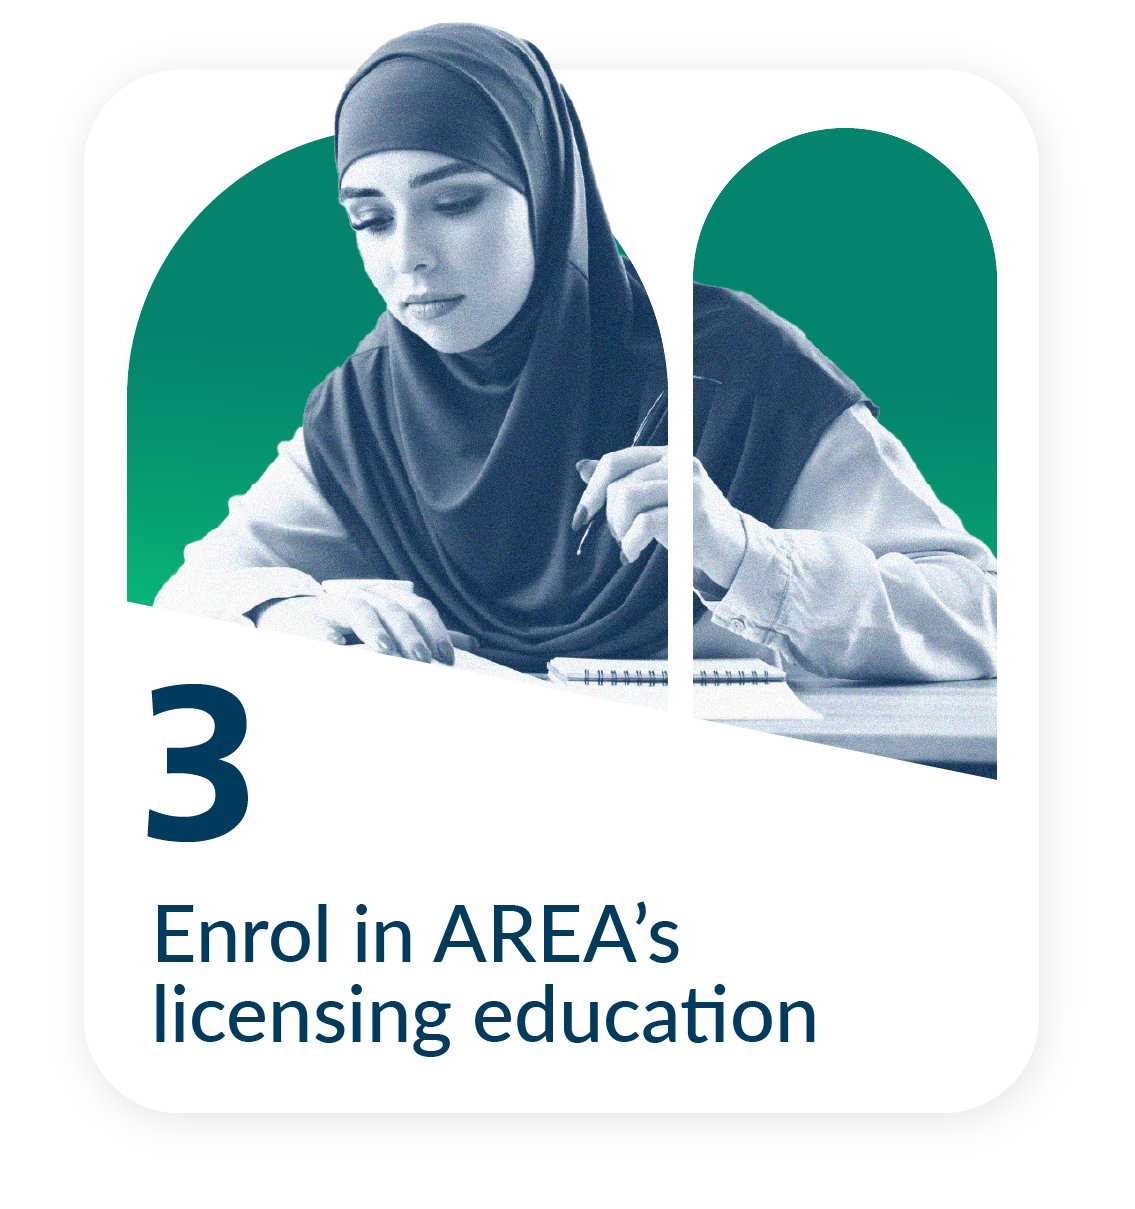 enrol in area's licensing education